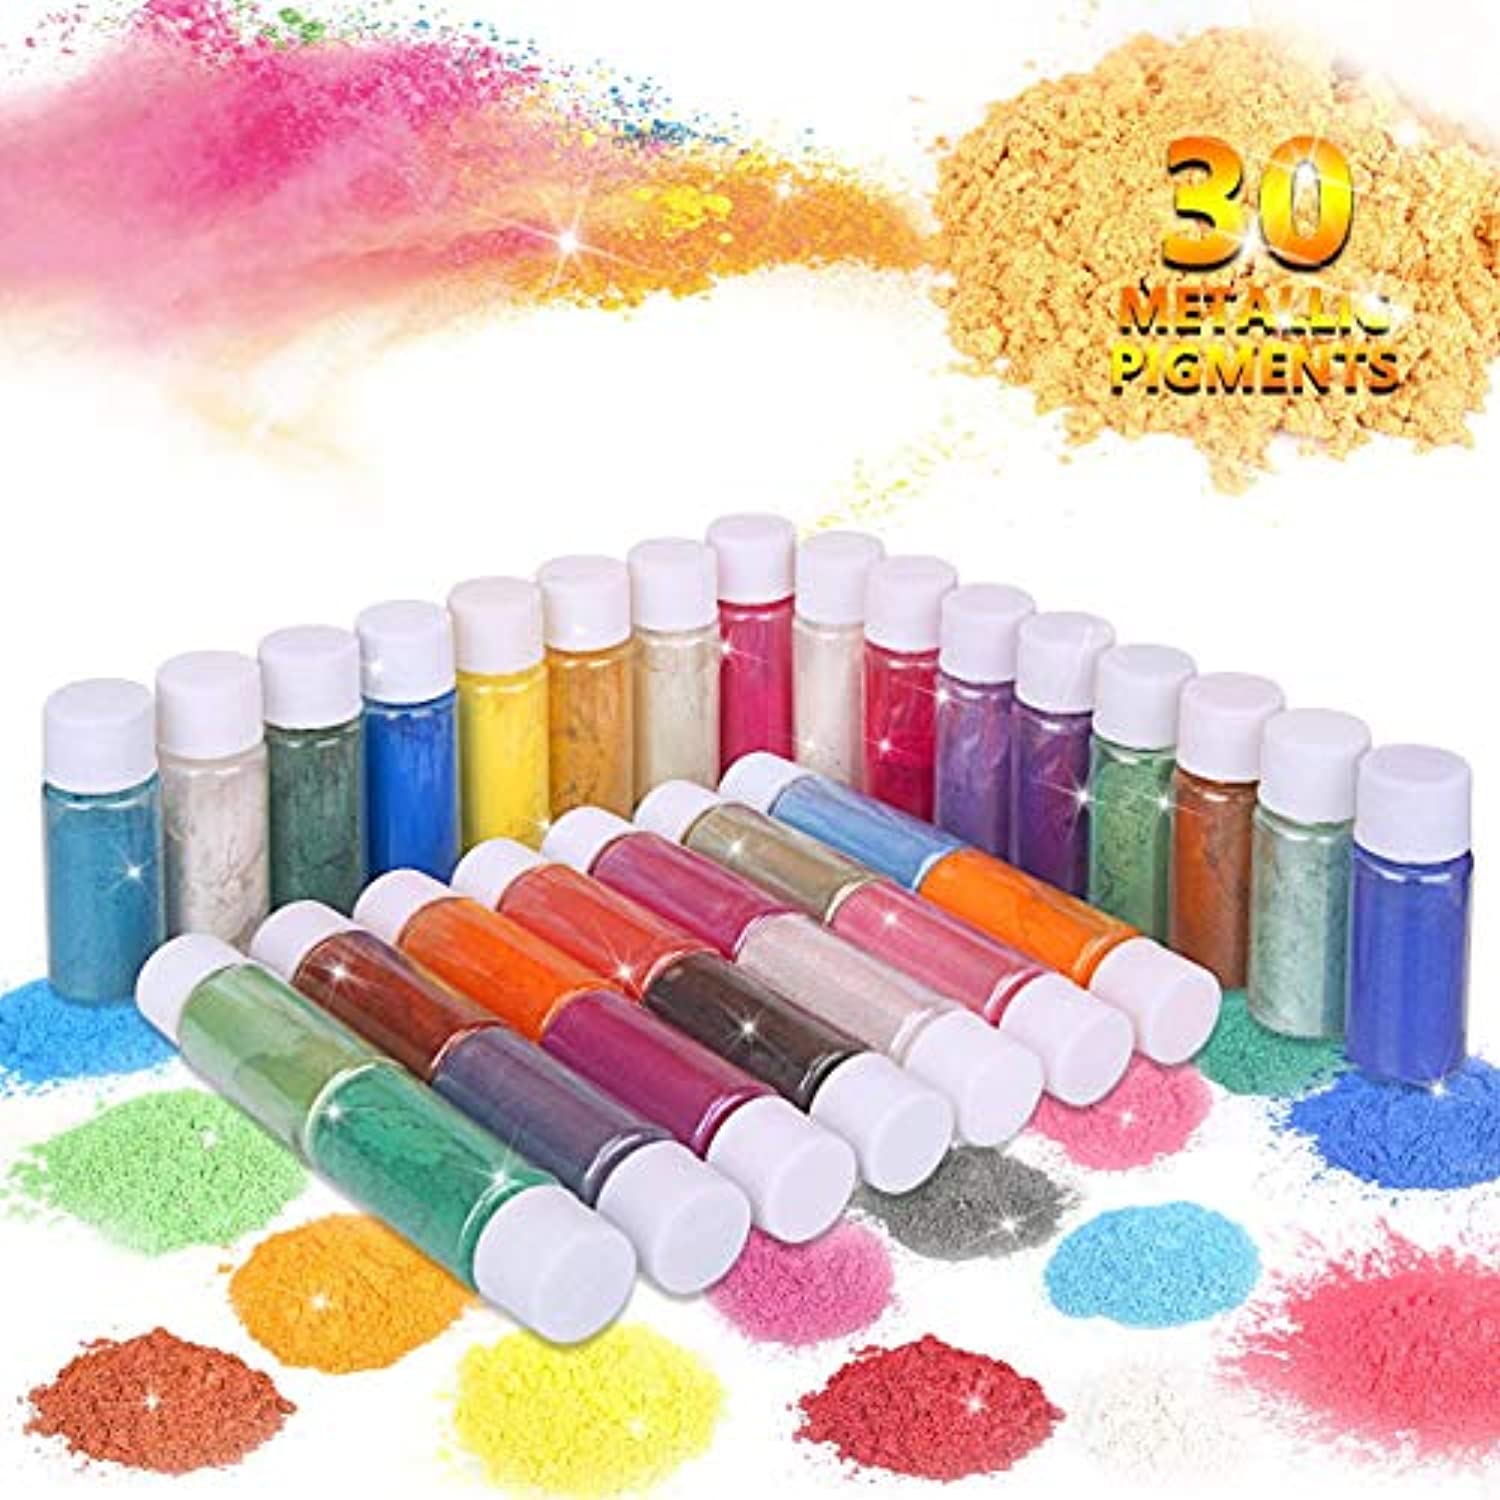 Polvo de mica brillante de 30 pigmentos de color, fabricación de jabón,  fabricación de velas, tinte de resina, polvo de mica orgánico para moldes  de